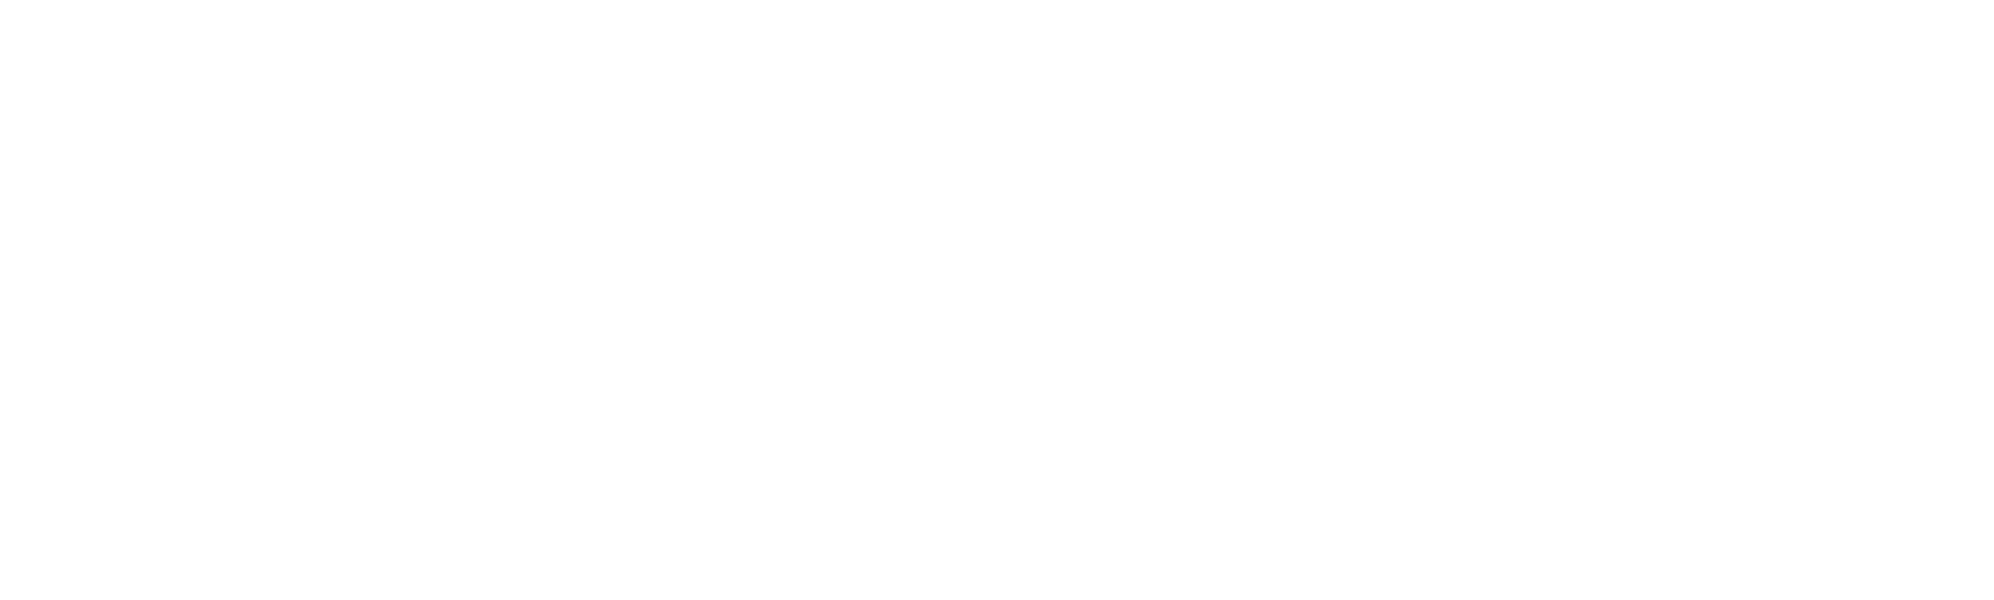 Catch the Fair One